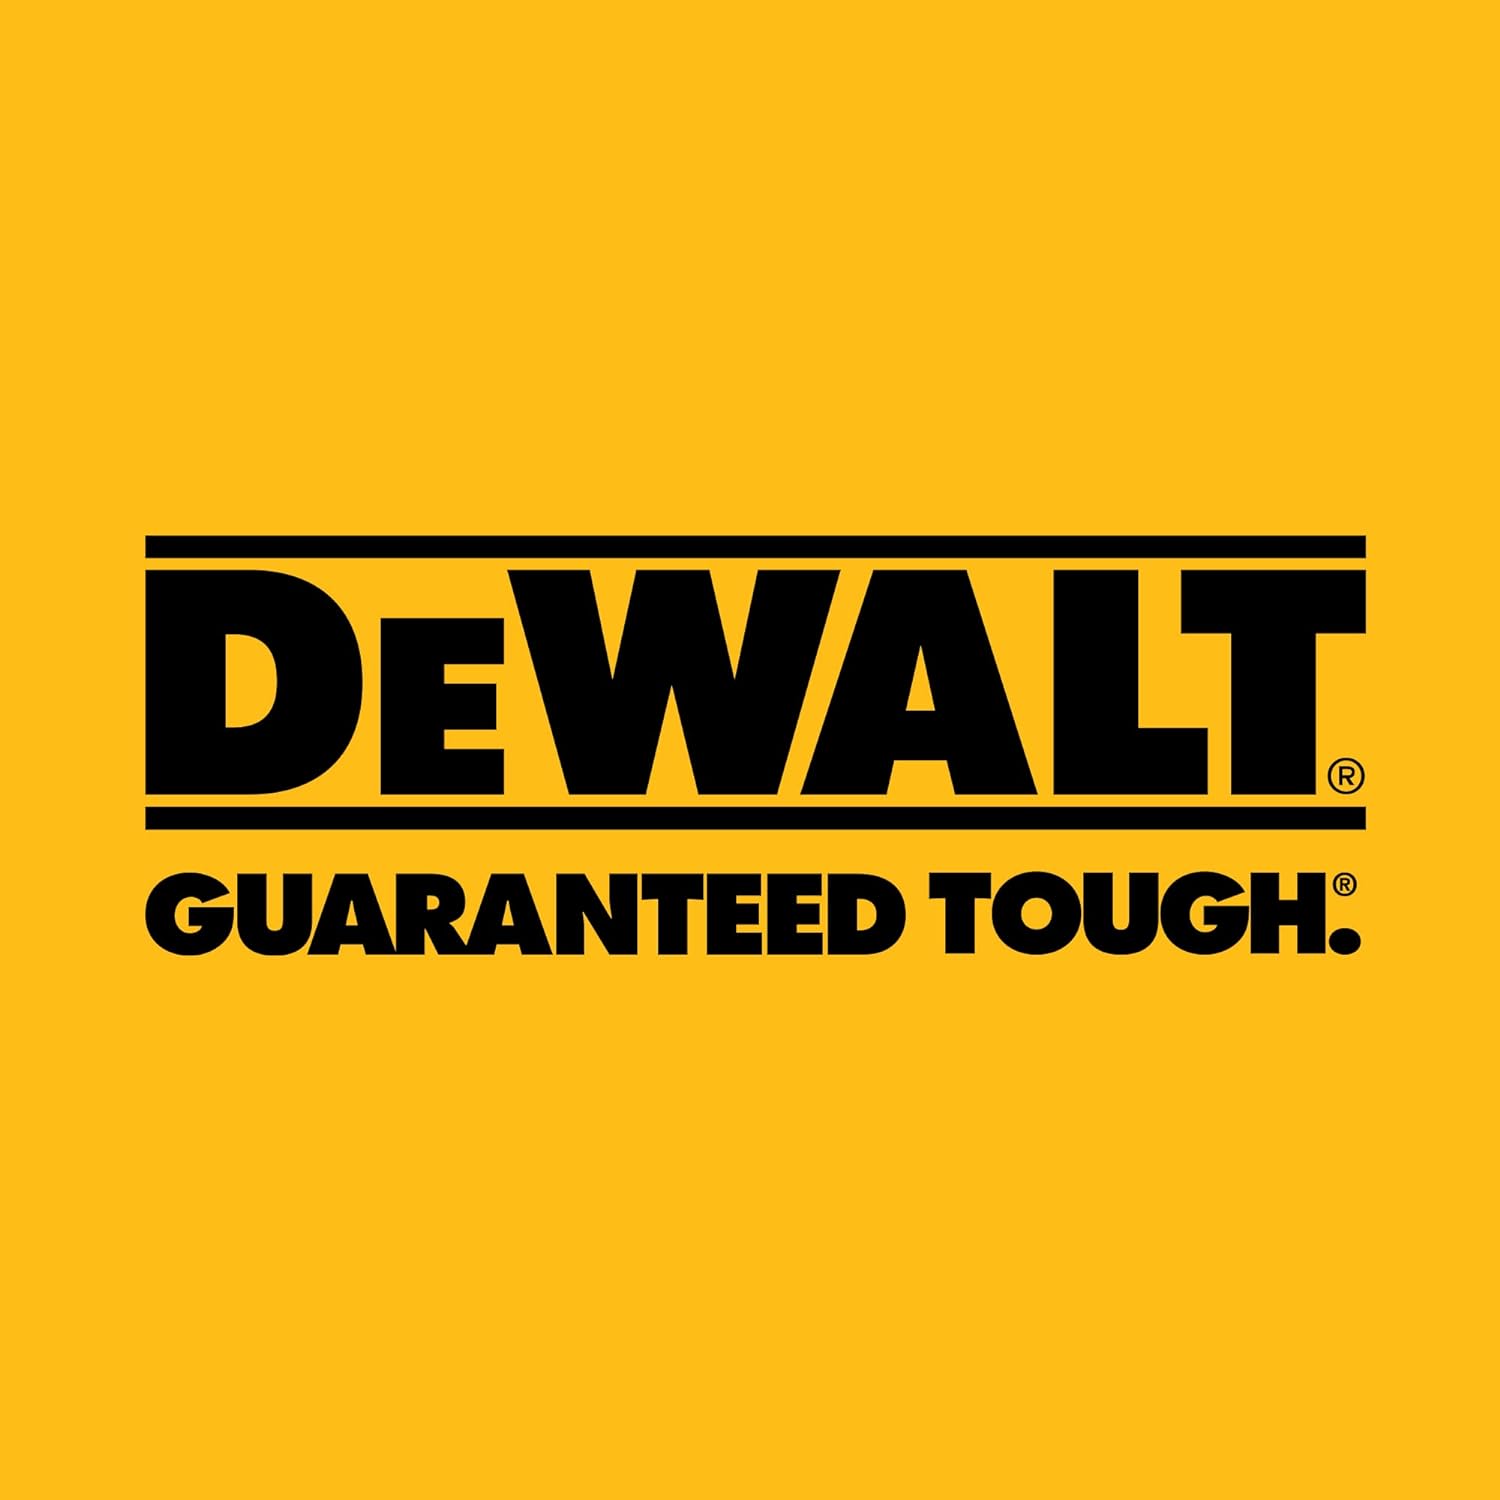 DEWALT 20V MAX* Angle Grinder Tool Kit, 4-1/2-Inch, Paddle Switch with Brake (DCG413R2)